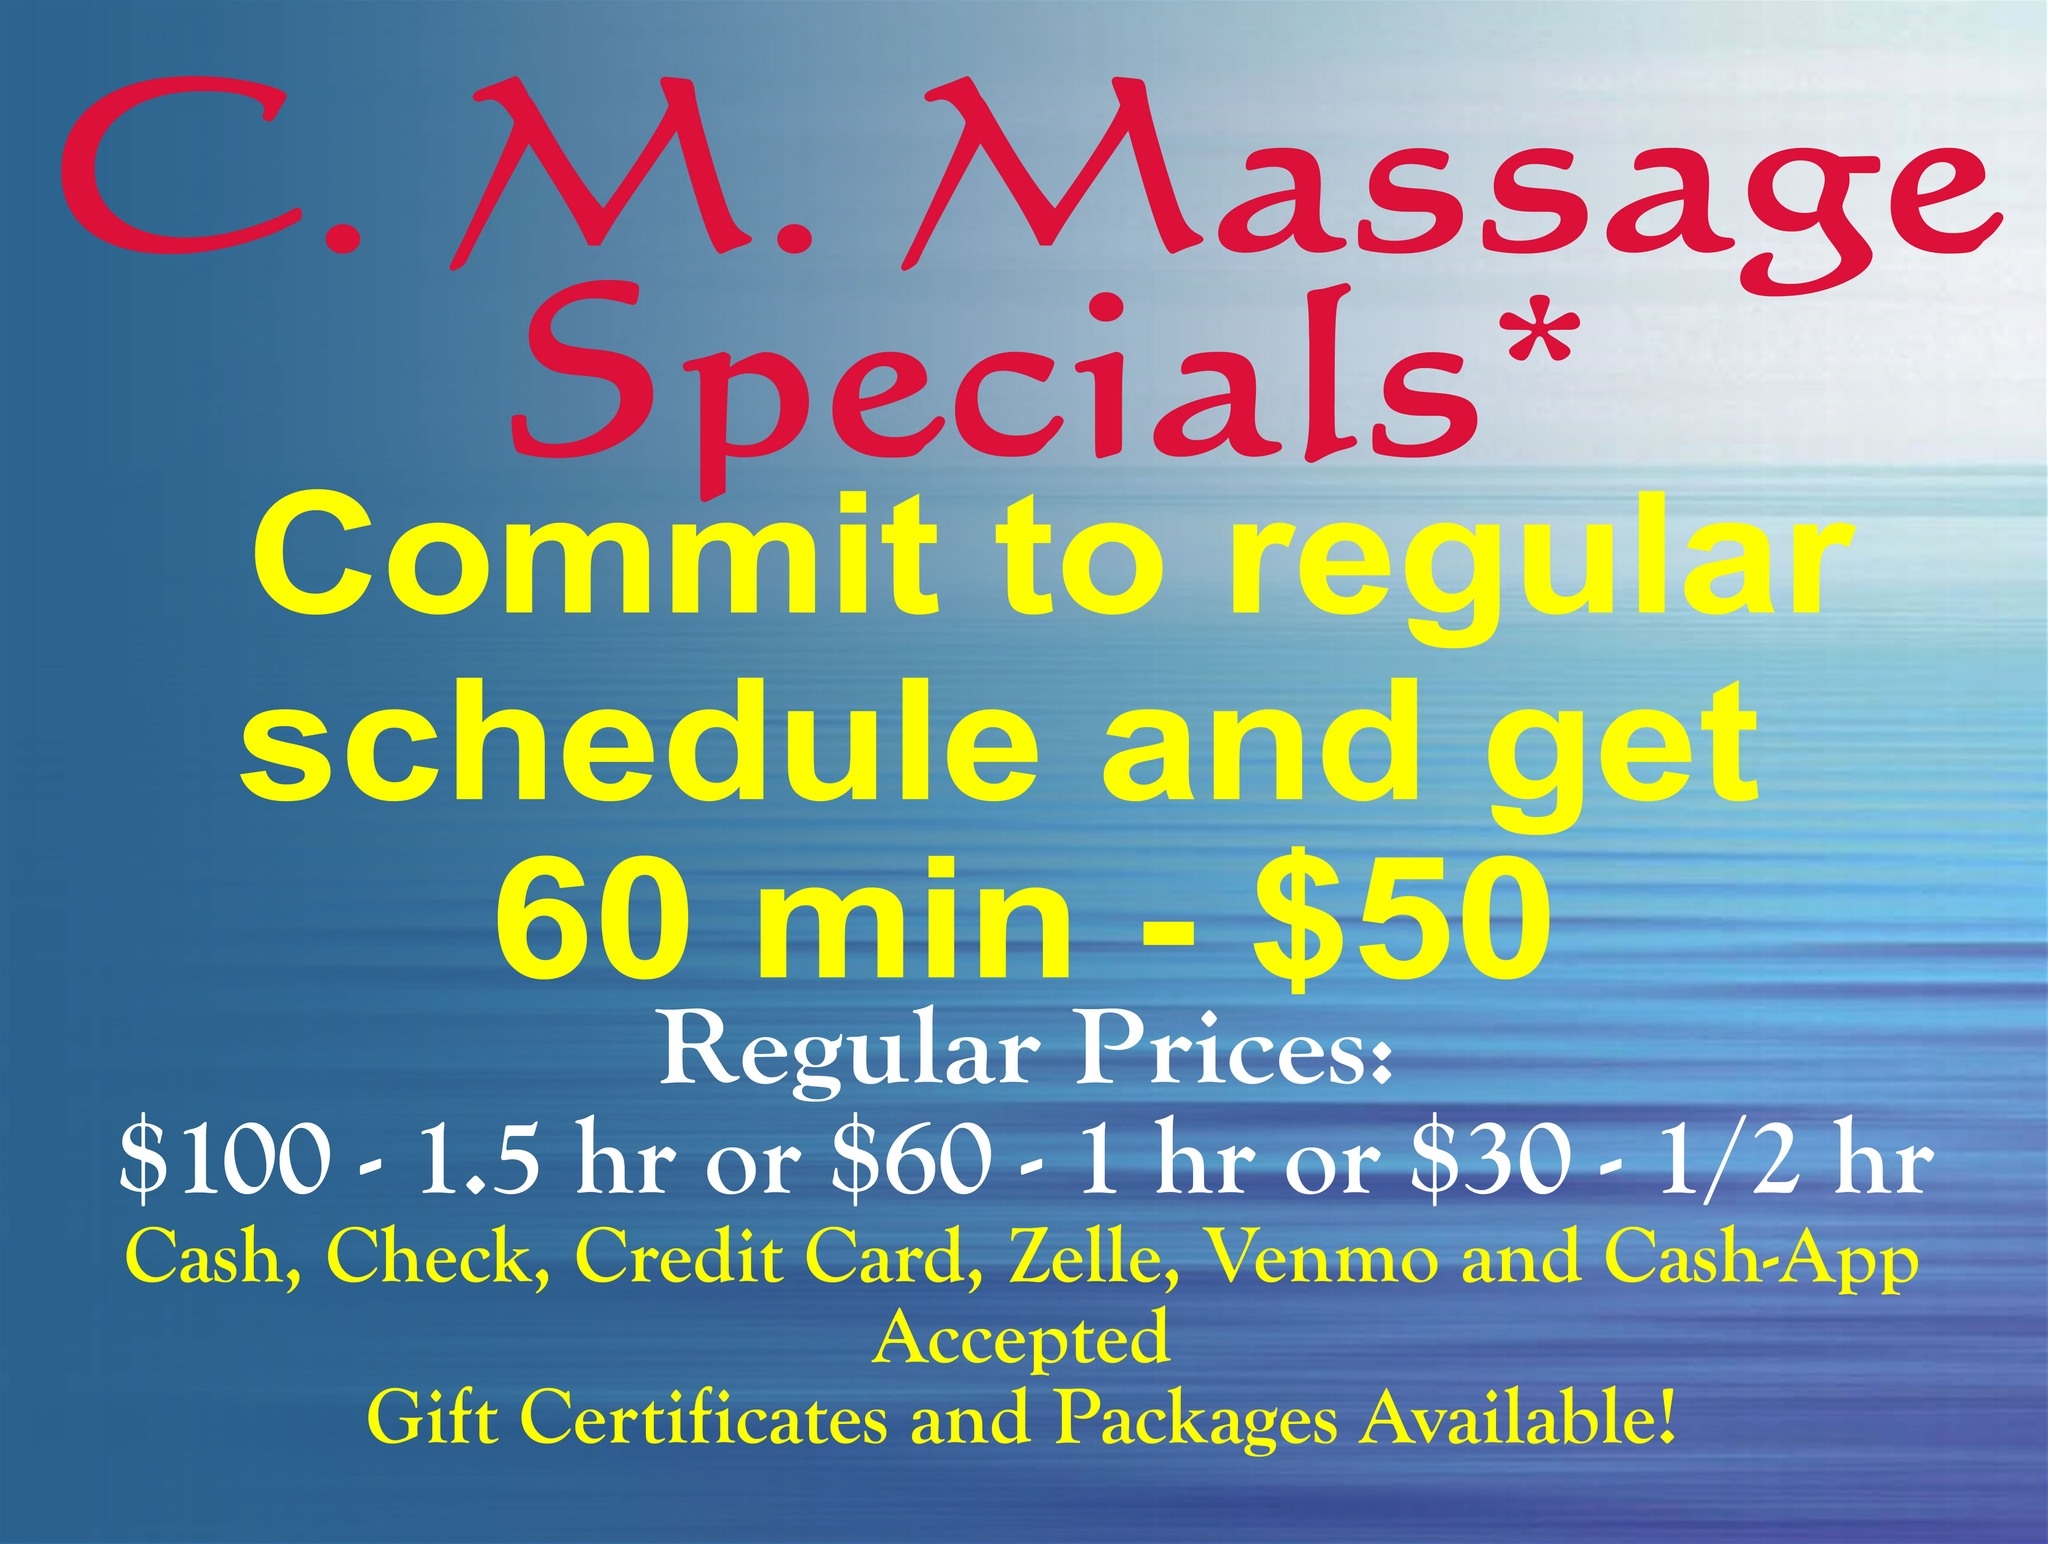 C. M. Massage - Clinical, Medical Massage 800 E Ellis Rd, Norton Shores Michigan 49441